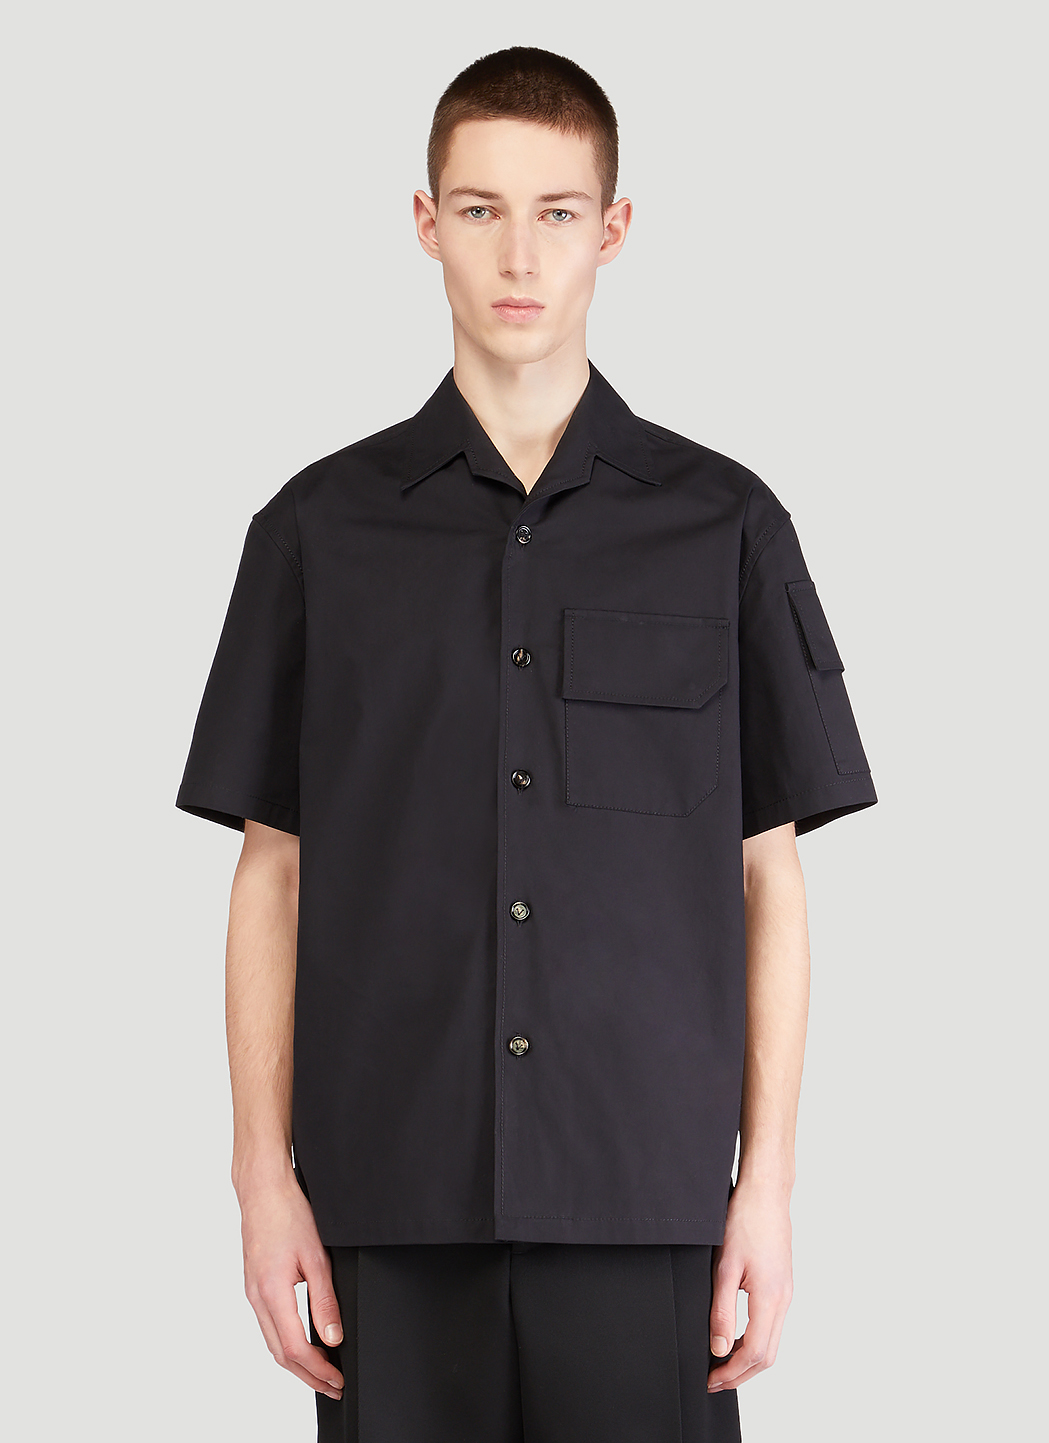 Bottega Veneta Men's Patch-Pocket Shirt in Black | LN-CC